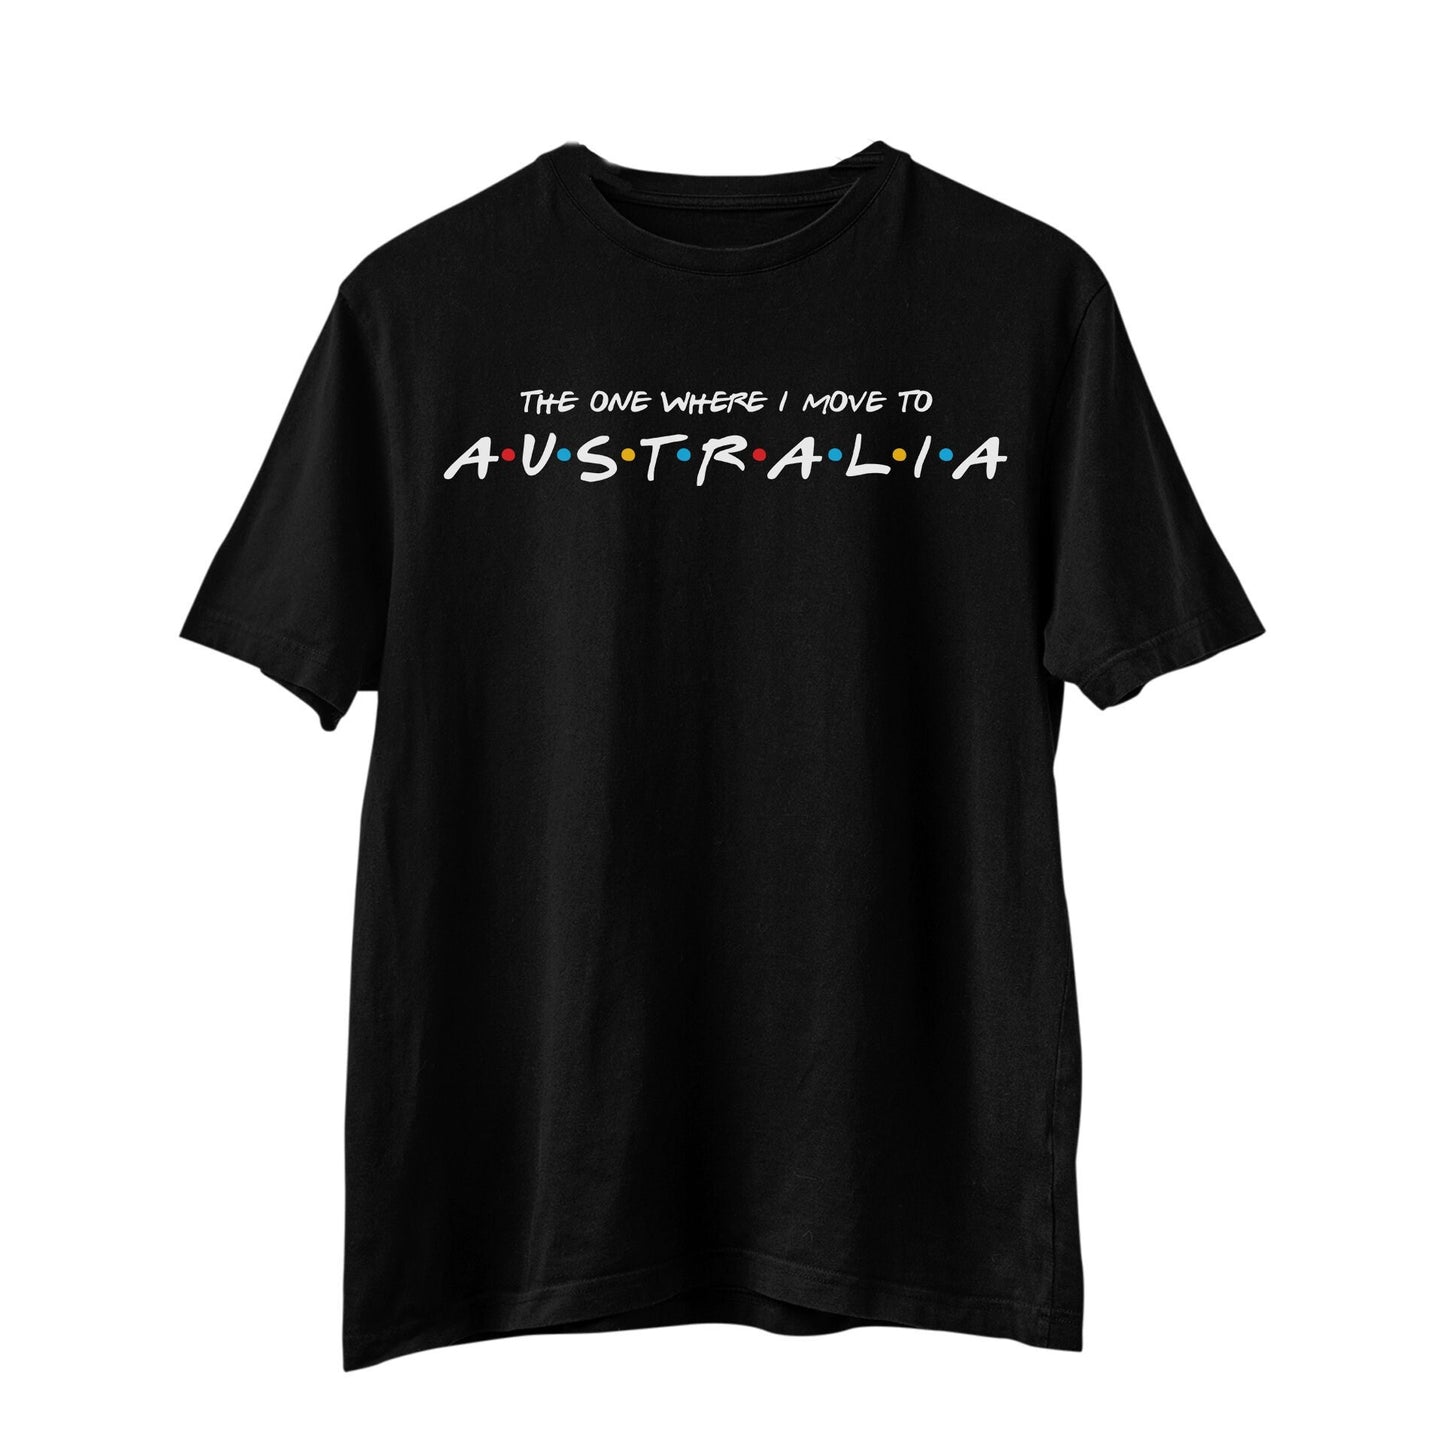 The One Where I move To Australia T-Shirt, Friends Shirt, Friends Tv Show, Friends Theme, Vacation Shirt, Women's, Men's, Funny T-Shirt Gift